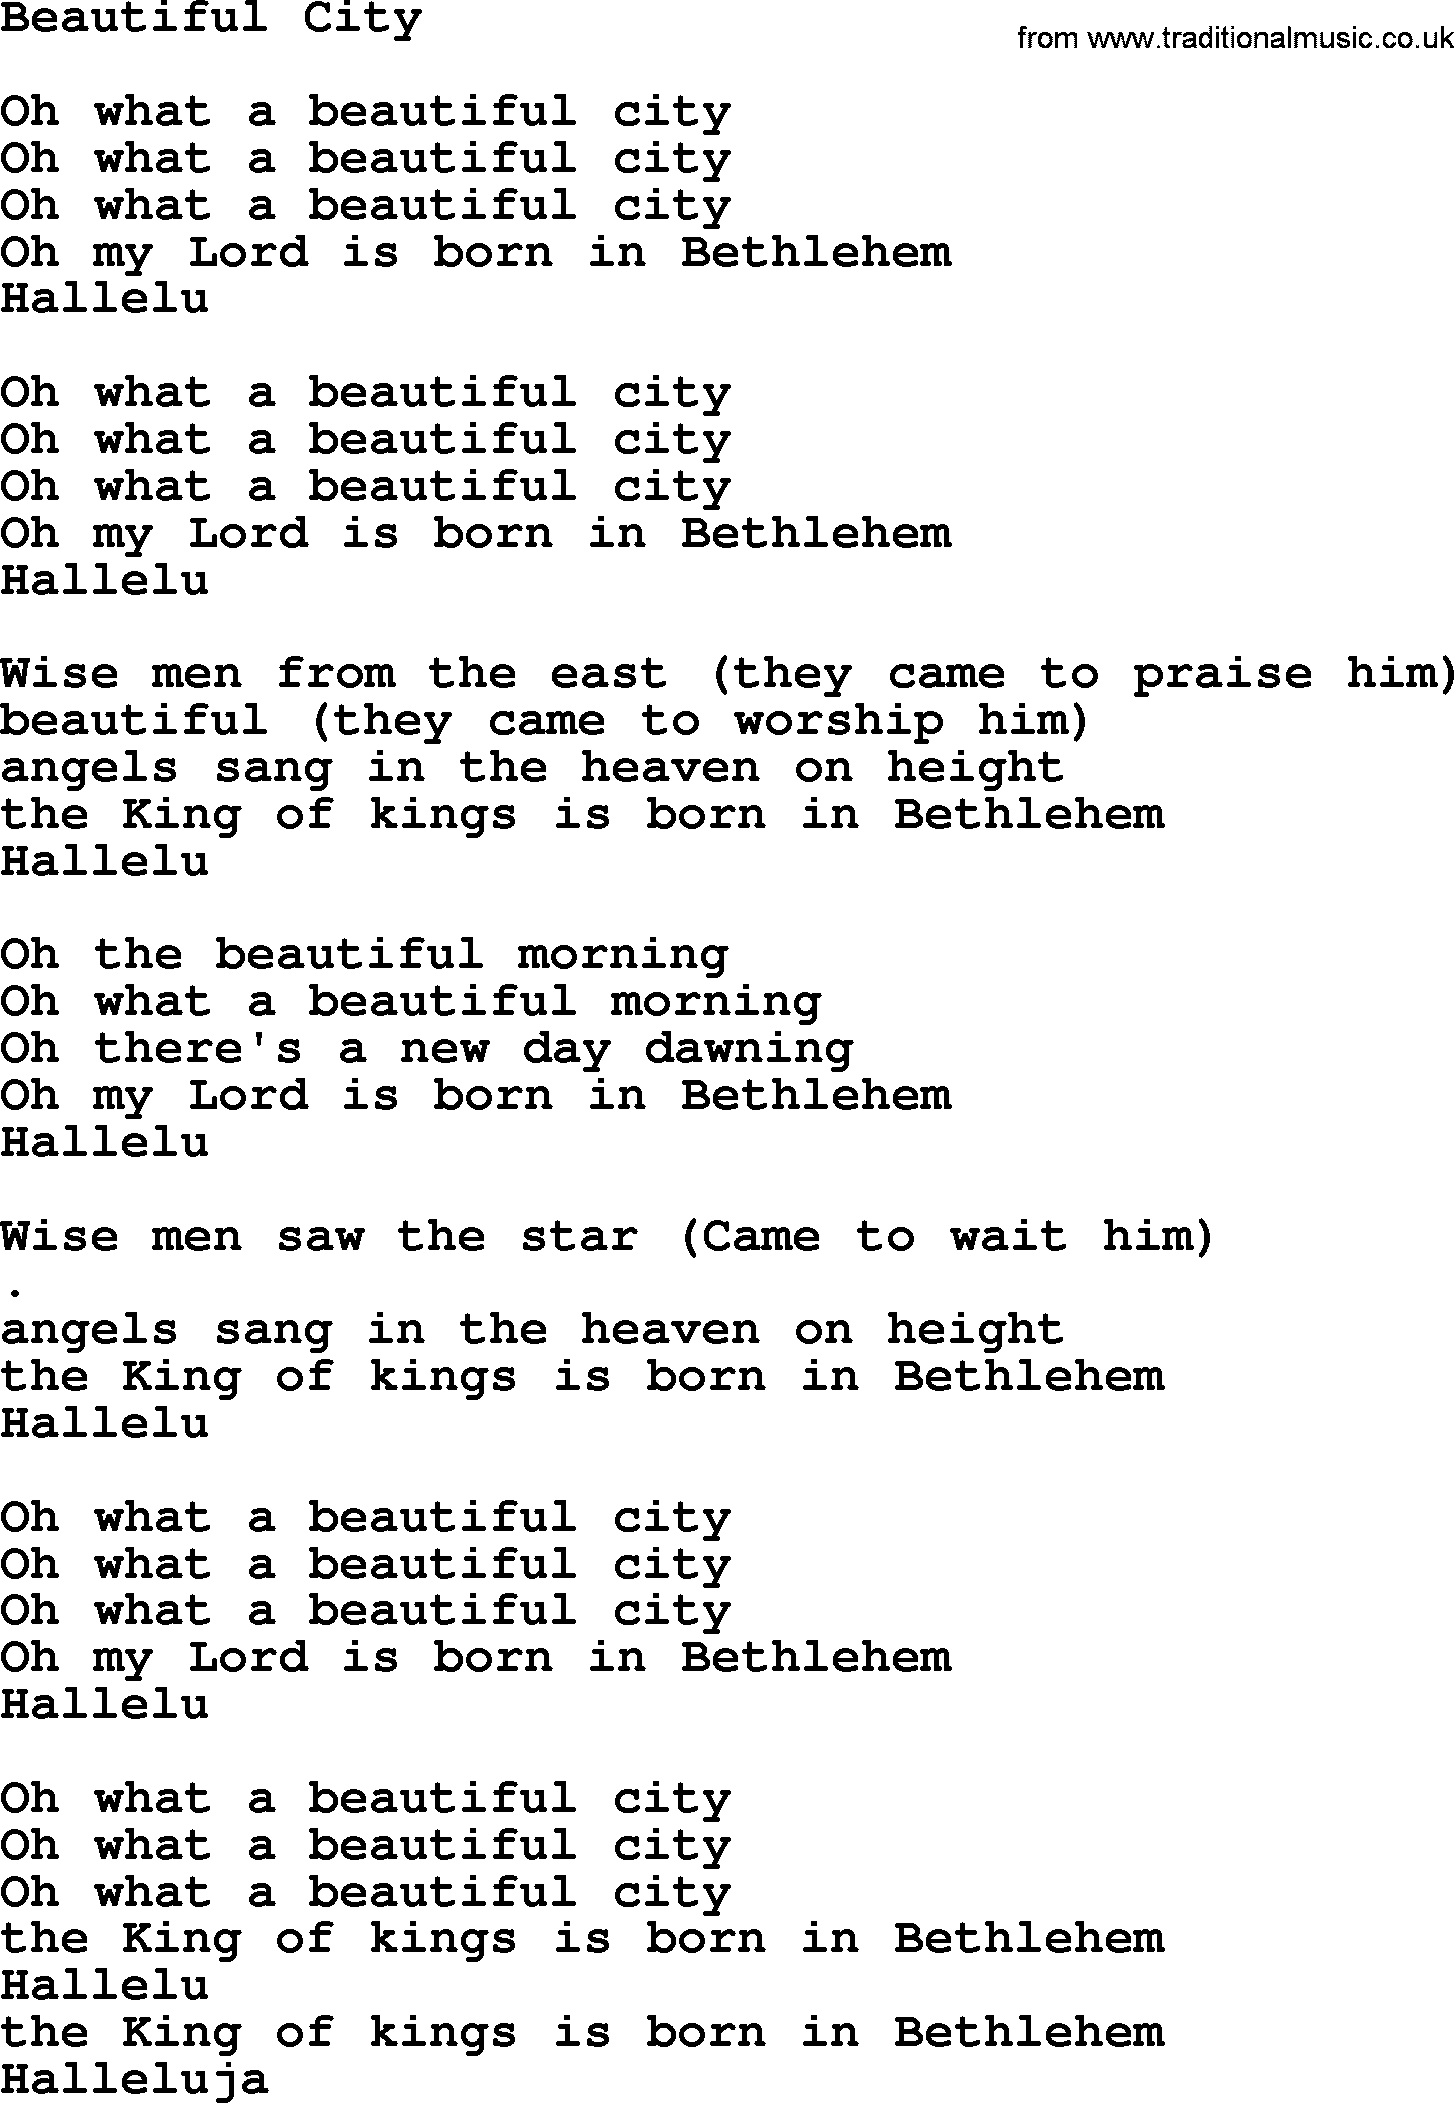 The Byrds song Beautiful City, lyrics